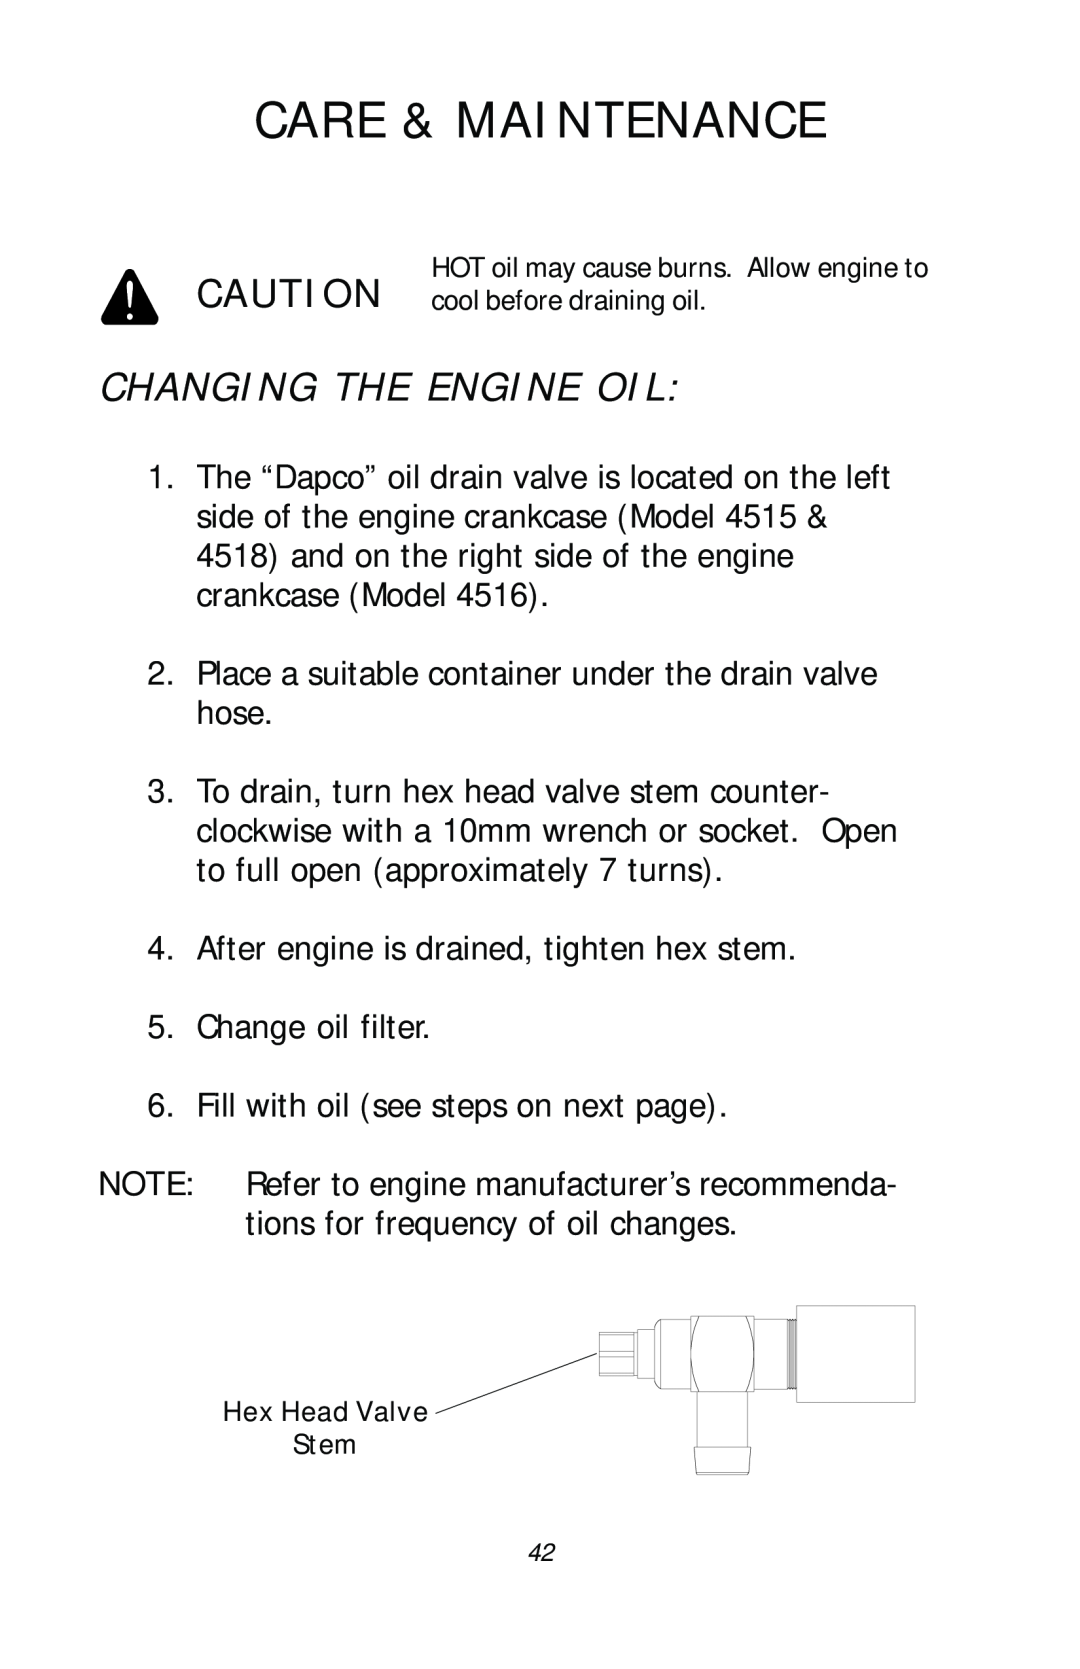 Dixon ZTR 4518, ZTR 4516, ZTR 4515, 13782-0503 manual Changing The Engine Oil, Care & Maintenance 